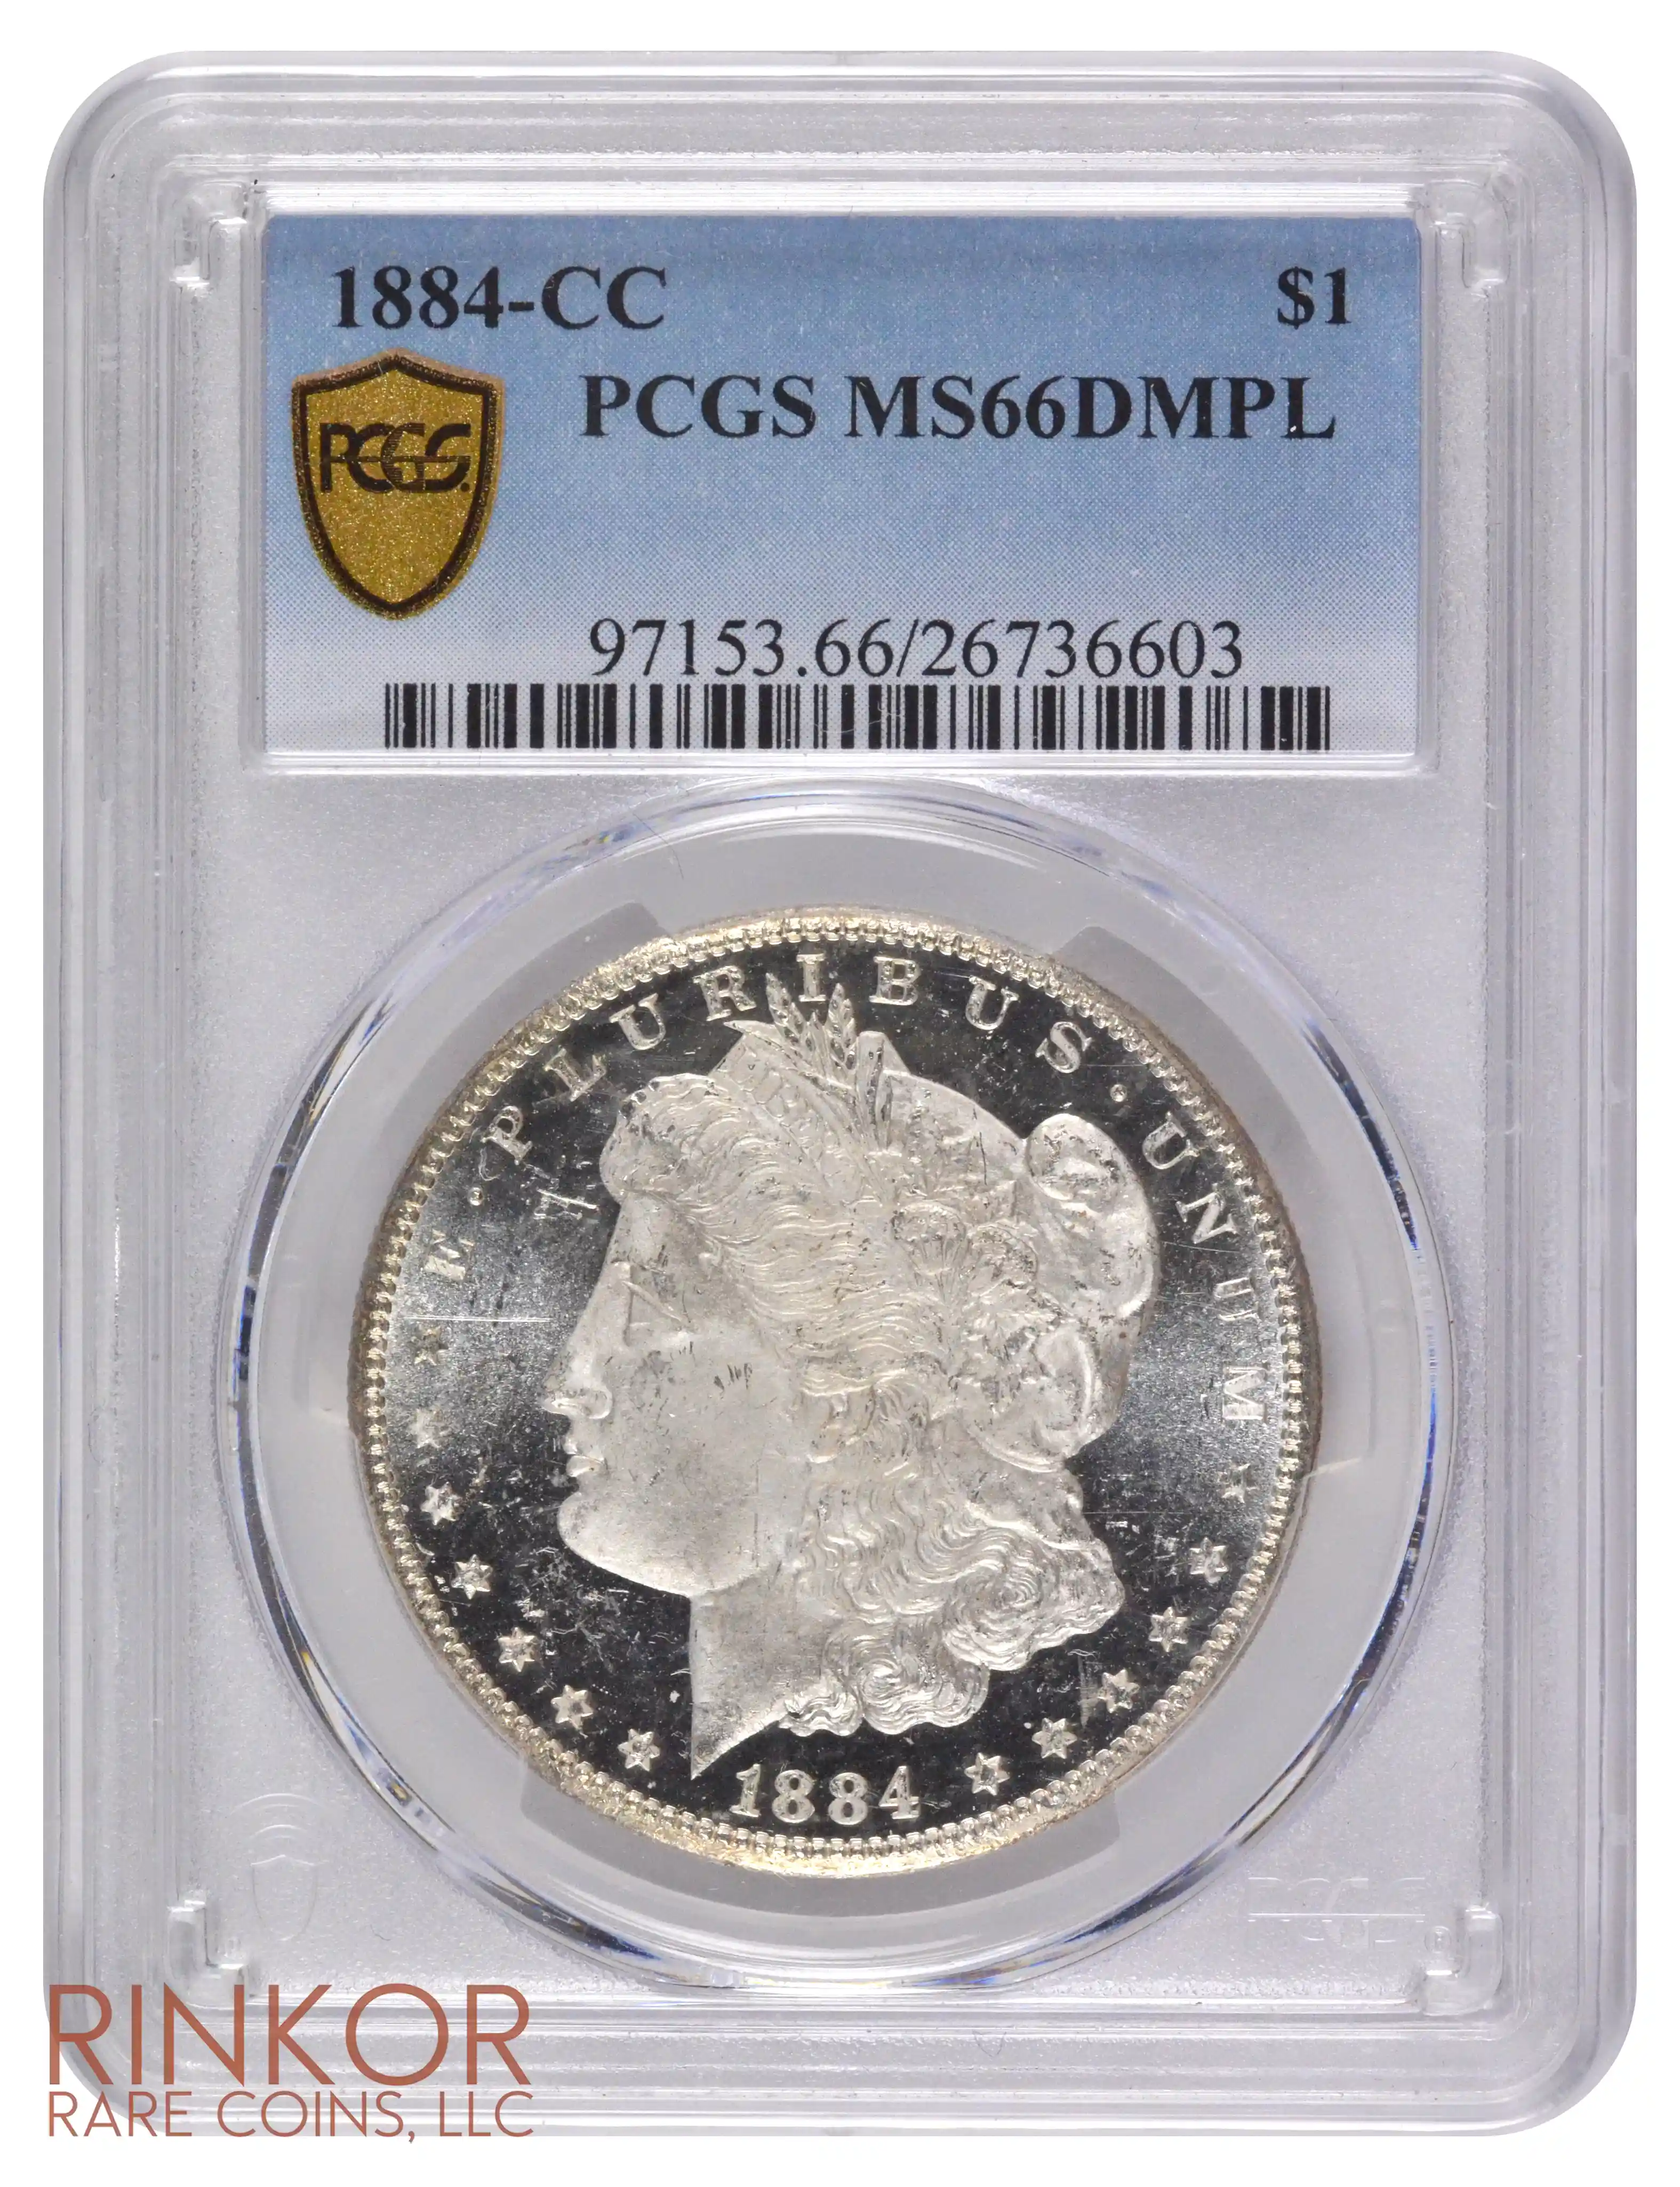 1884-CC $1 PCGS MS 66 DMPL 